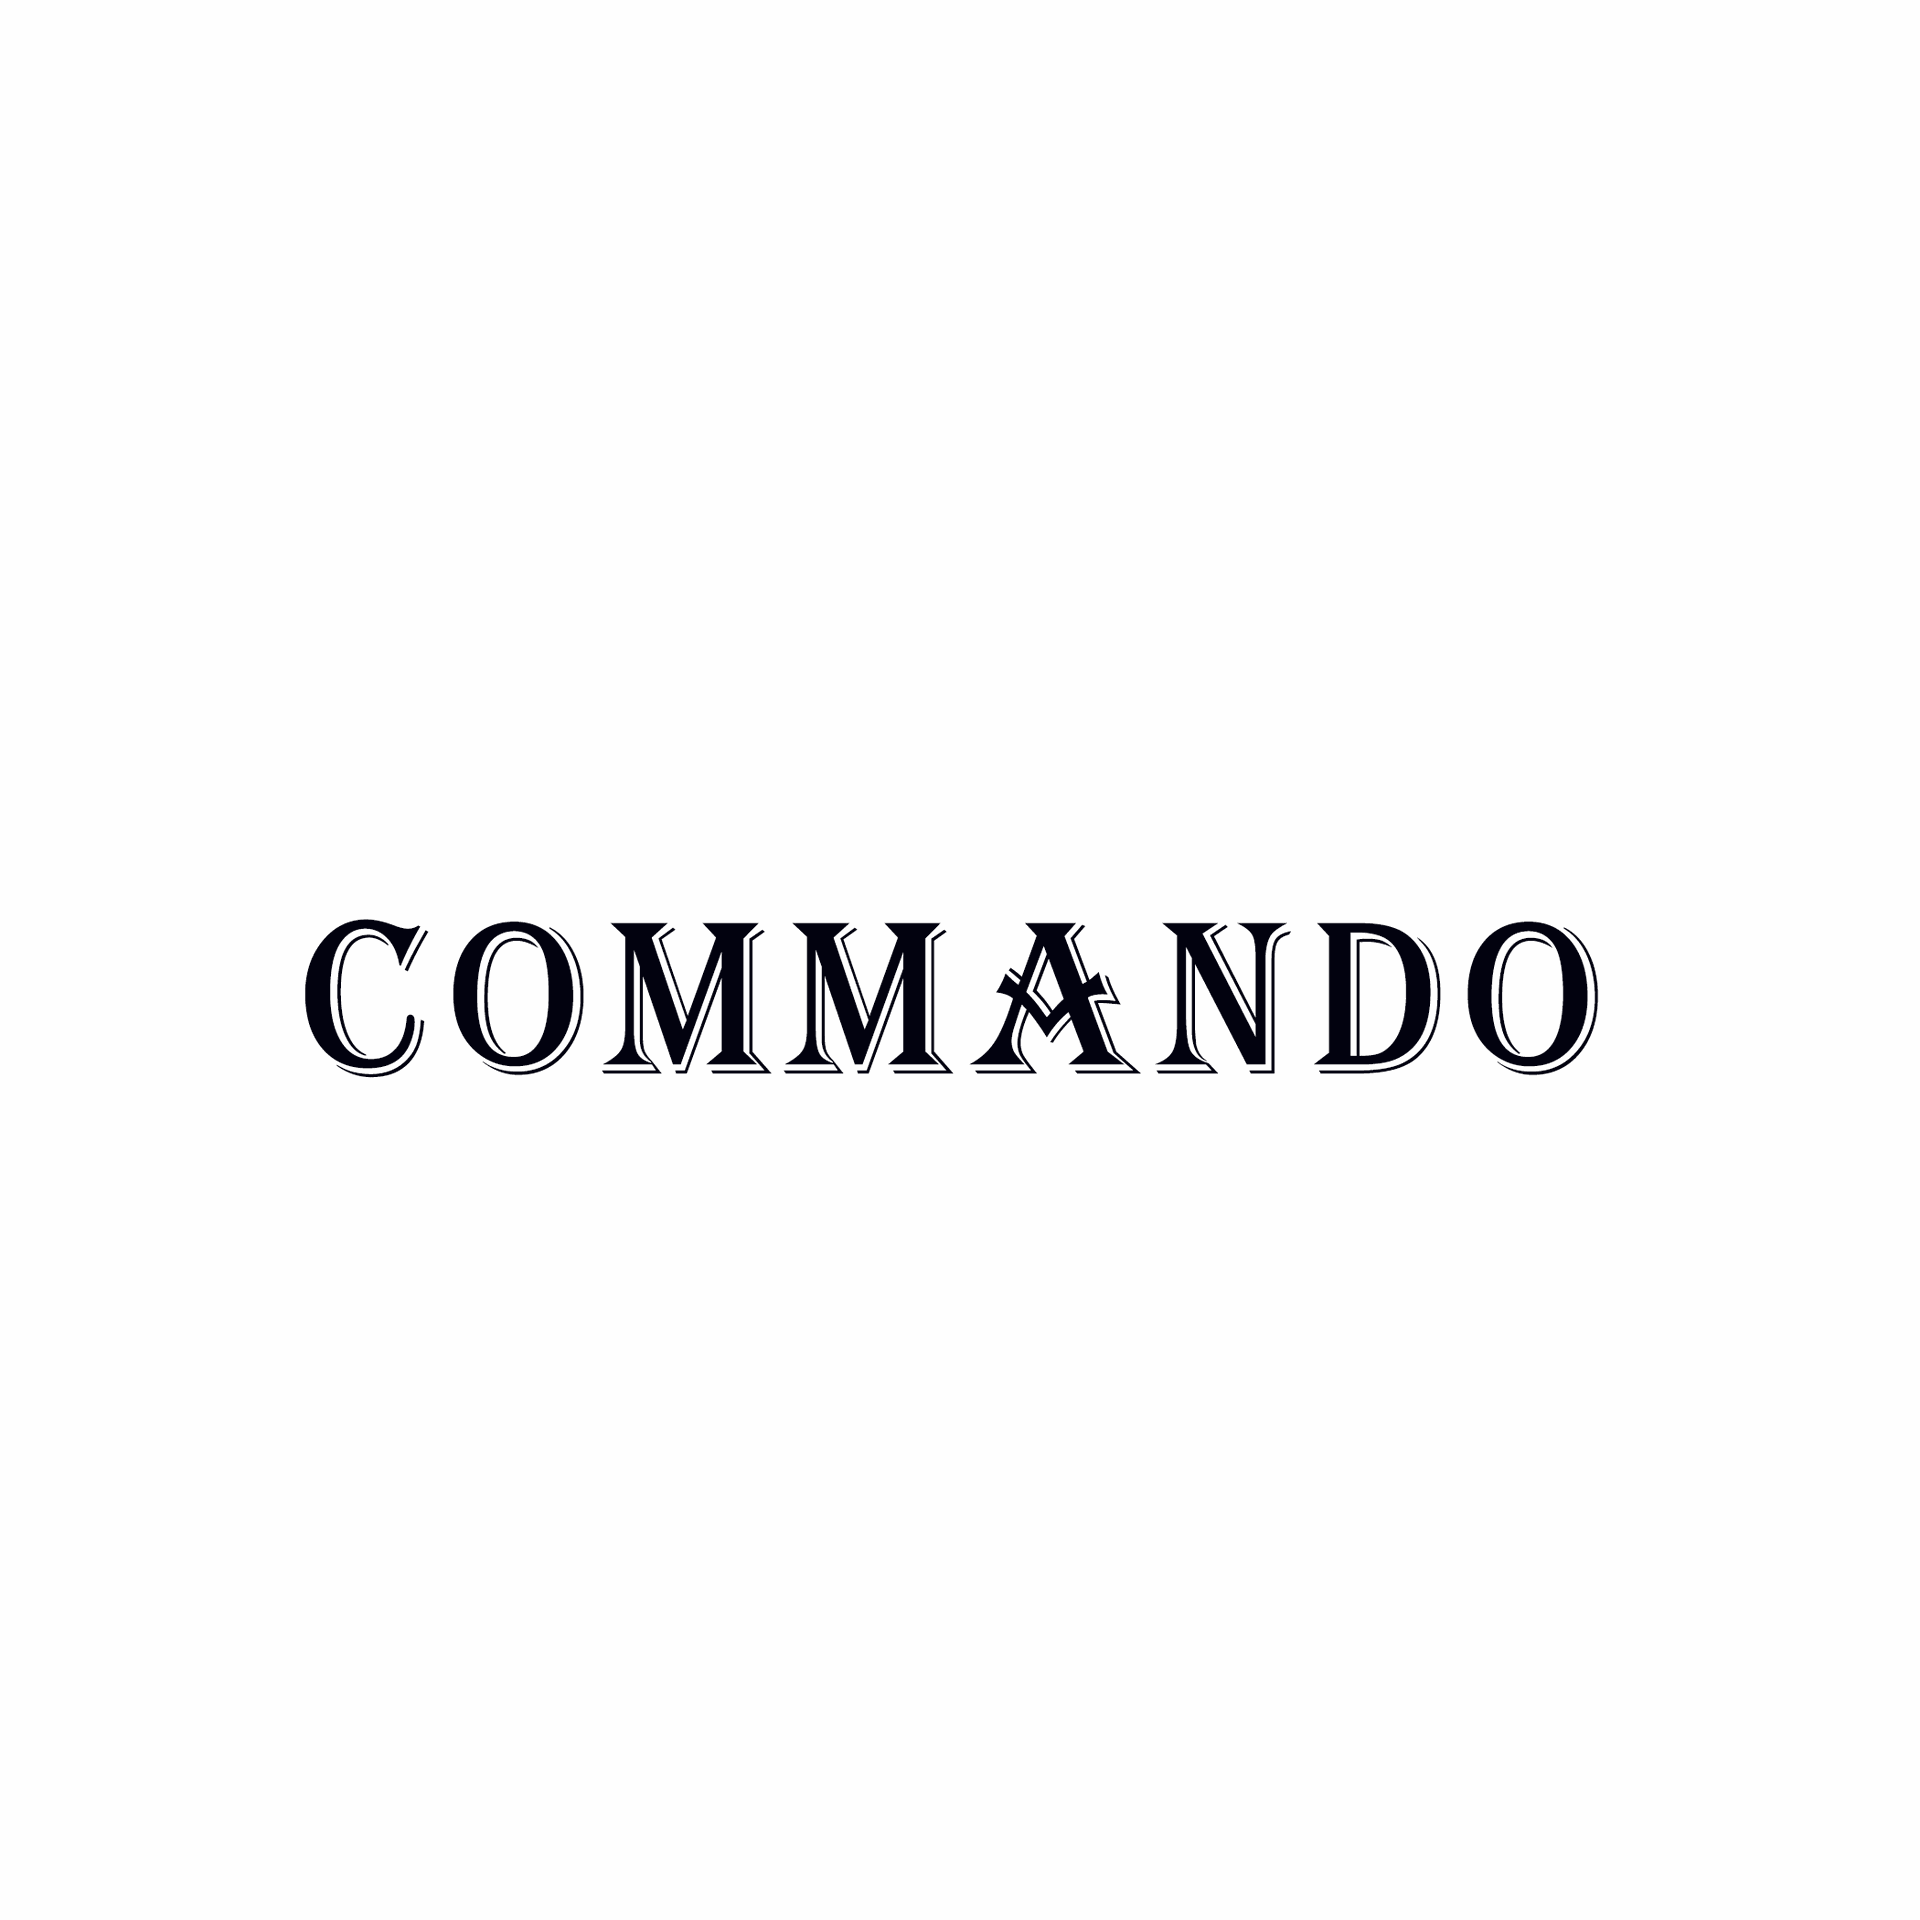 Brand: Commando